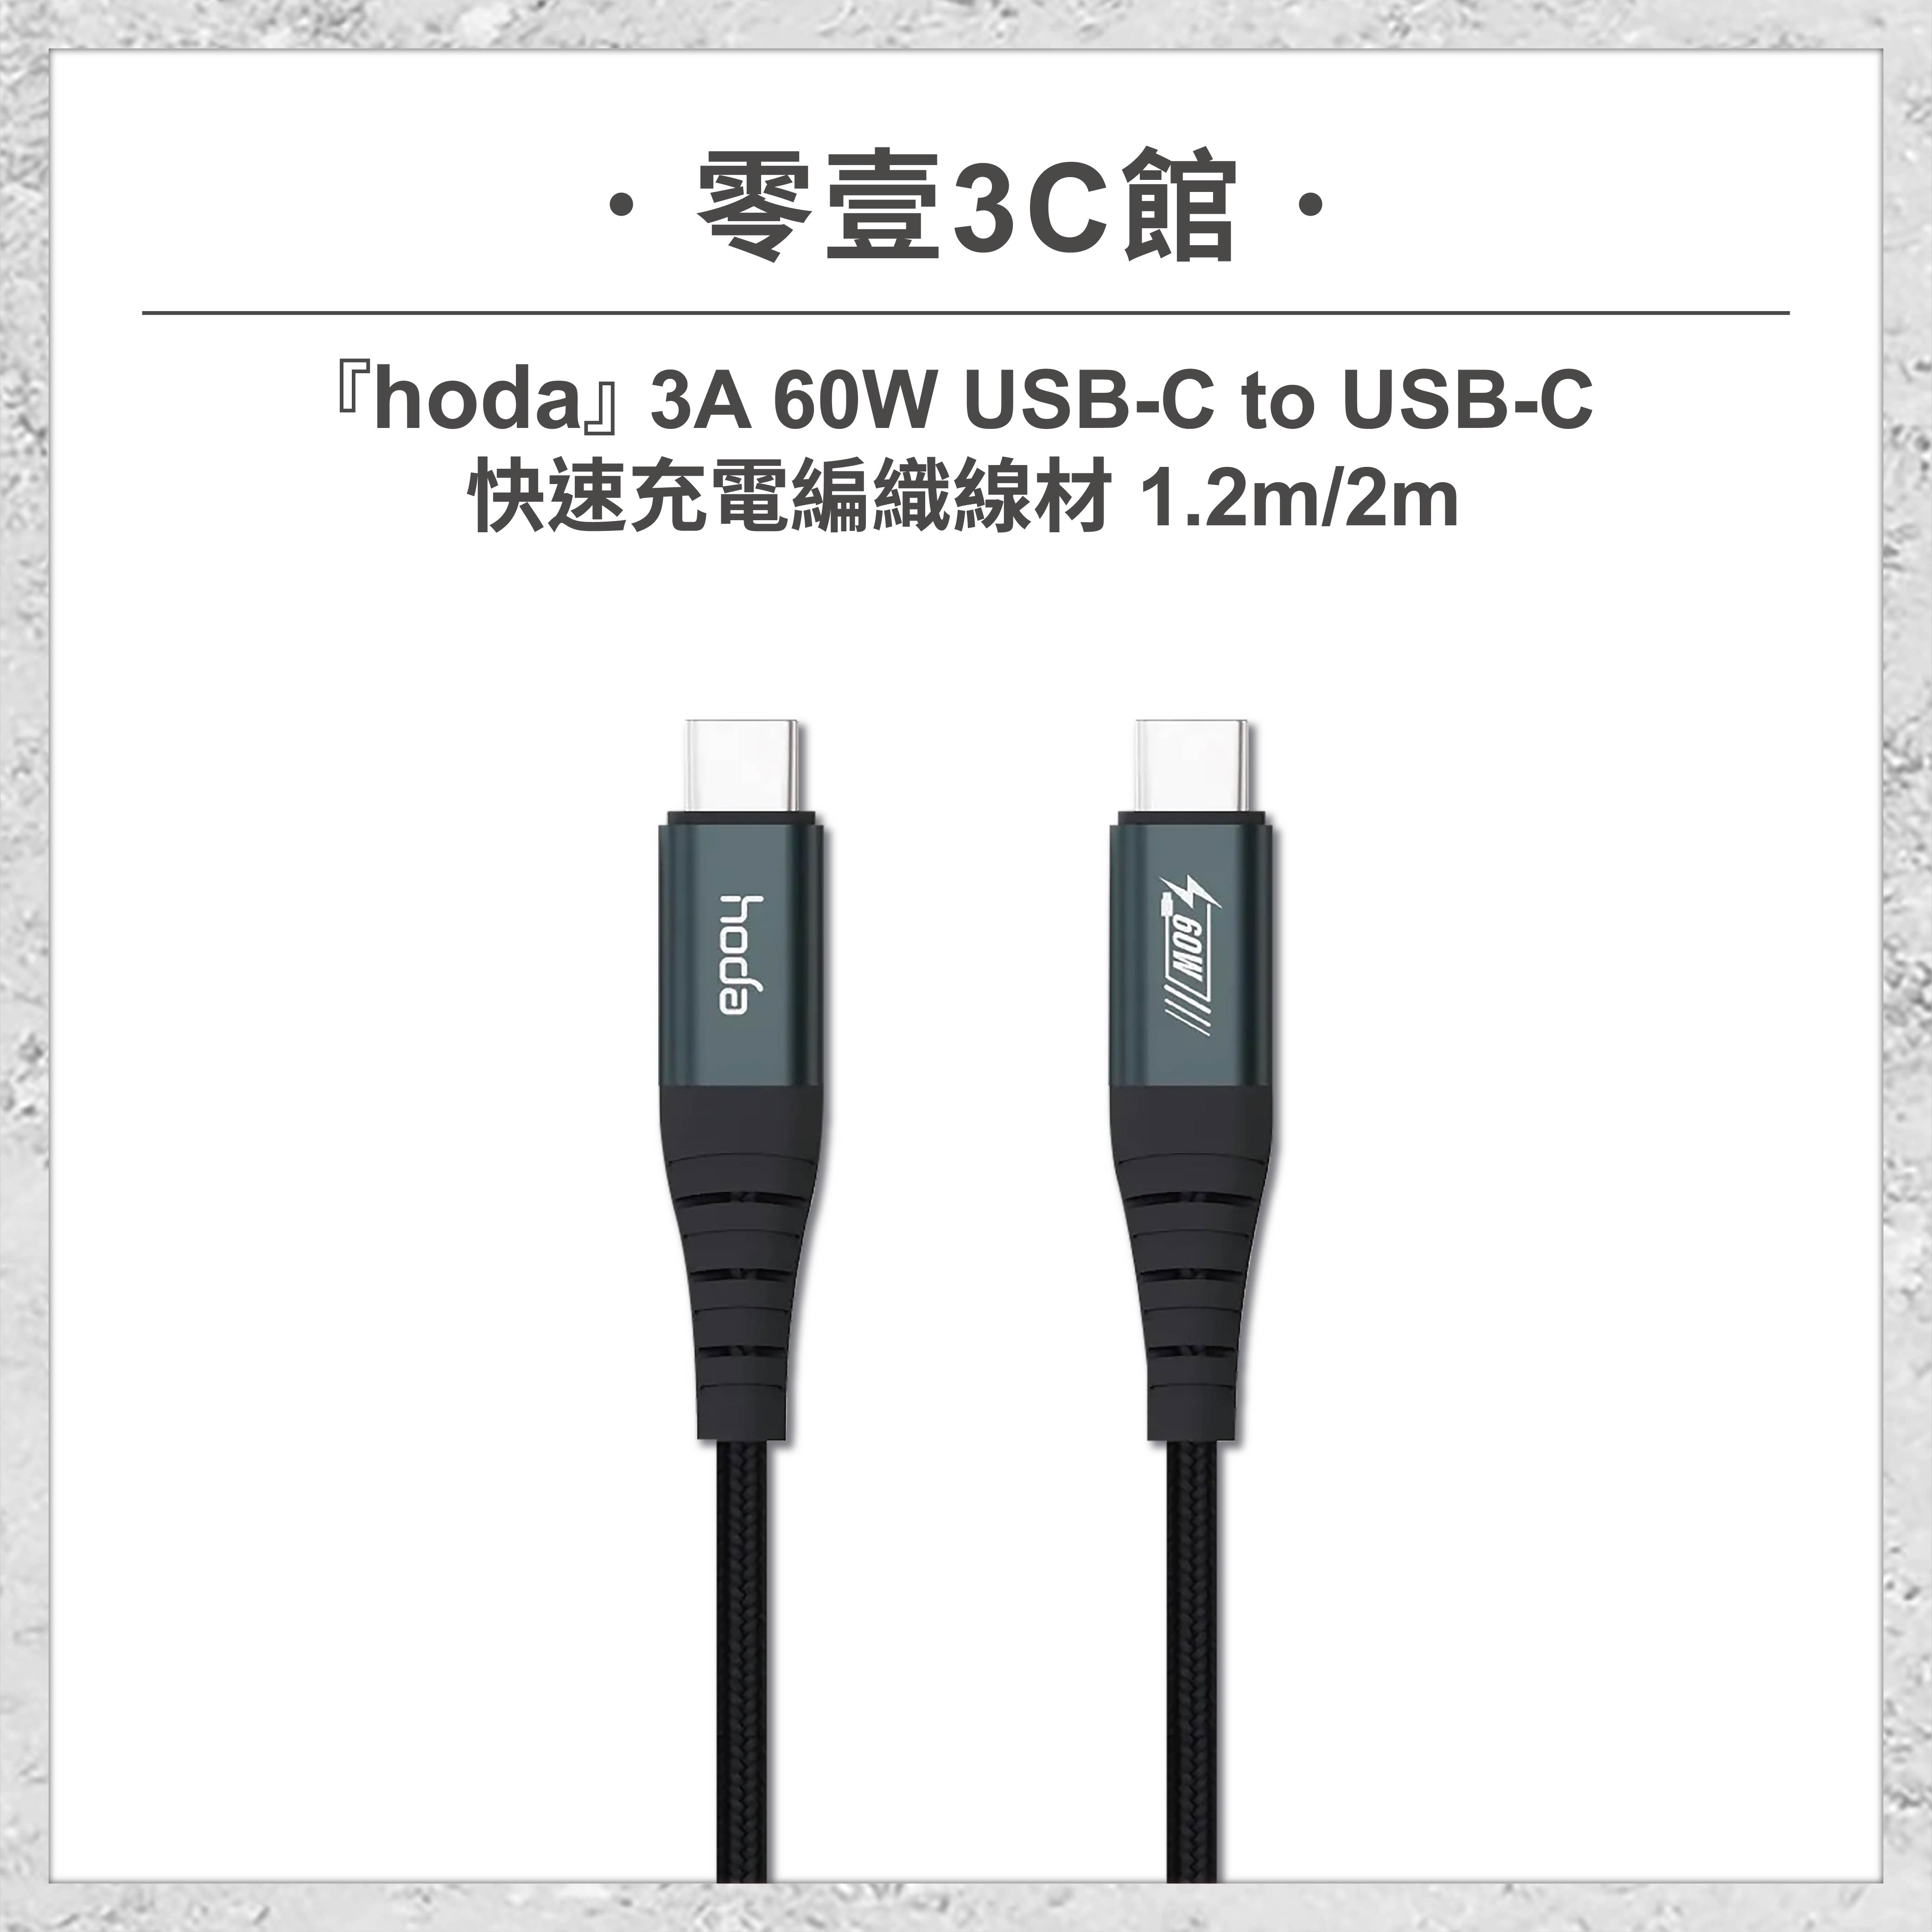 『hoda』3A 60W USB-C to USB-C快速充電編織線材 1.2m/2m快速傳輸線 雙頭Type-C充電線